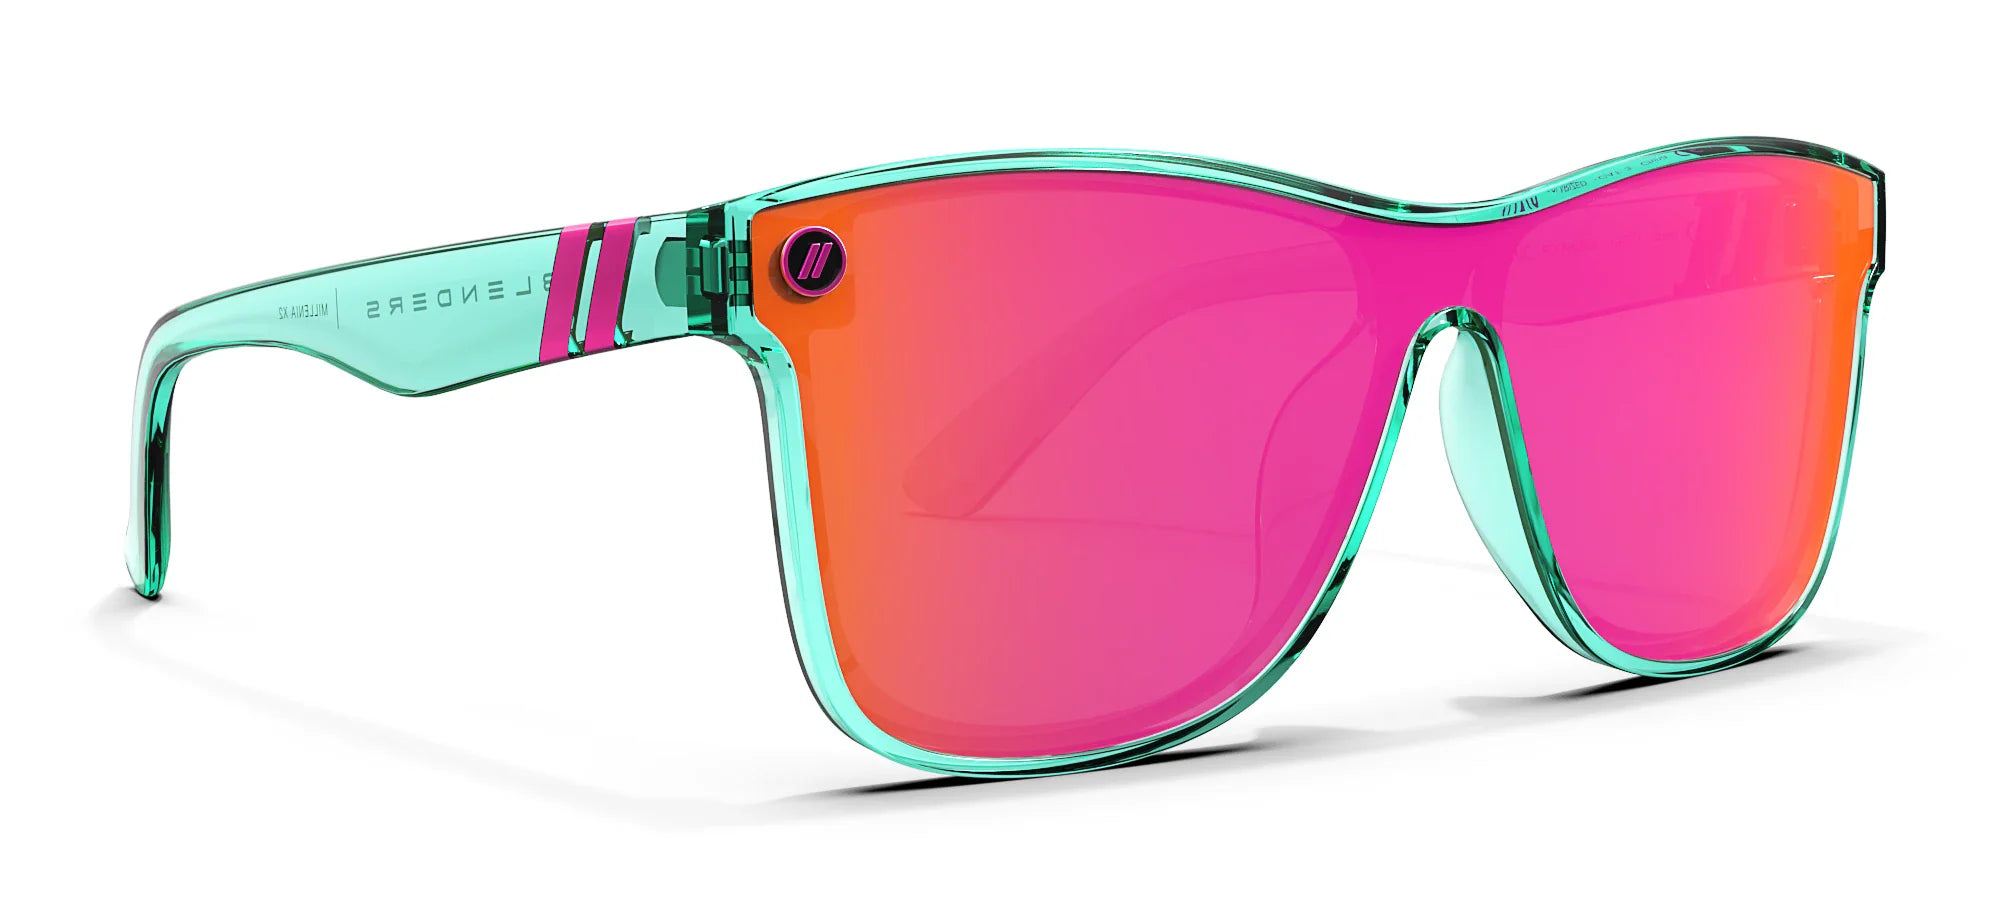 Dance Electric Polarized Sunglasses - Hot Pink Shield Lens & Teal Cat Eye Frame